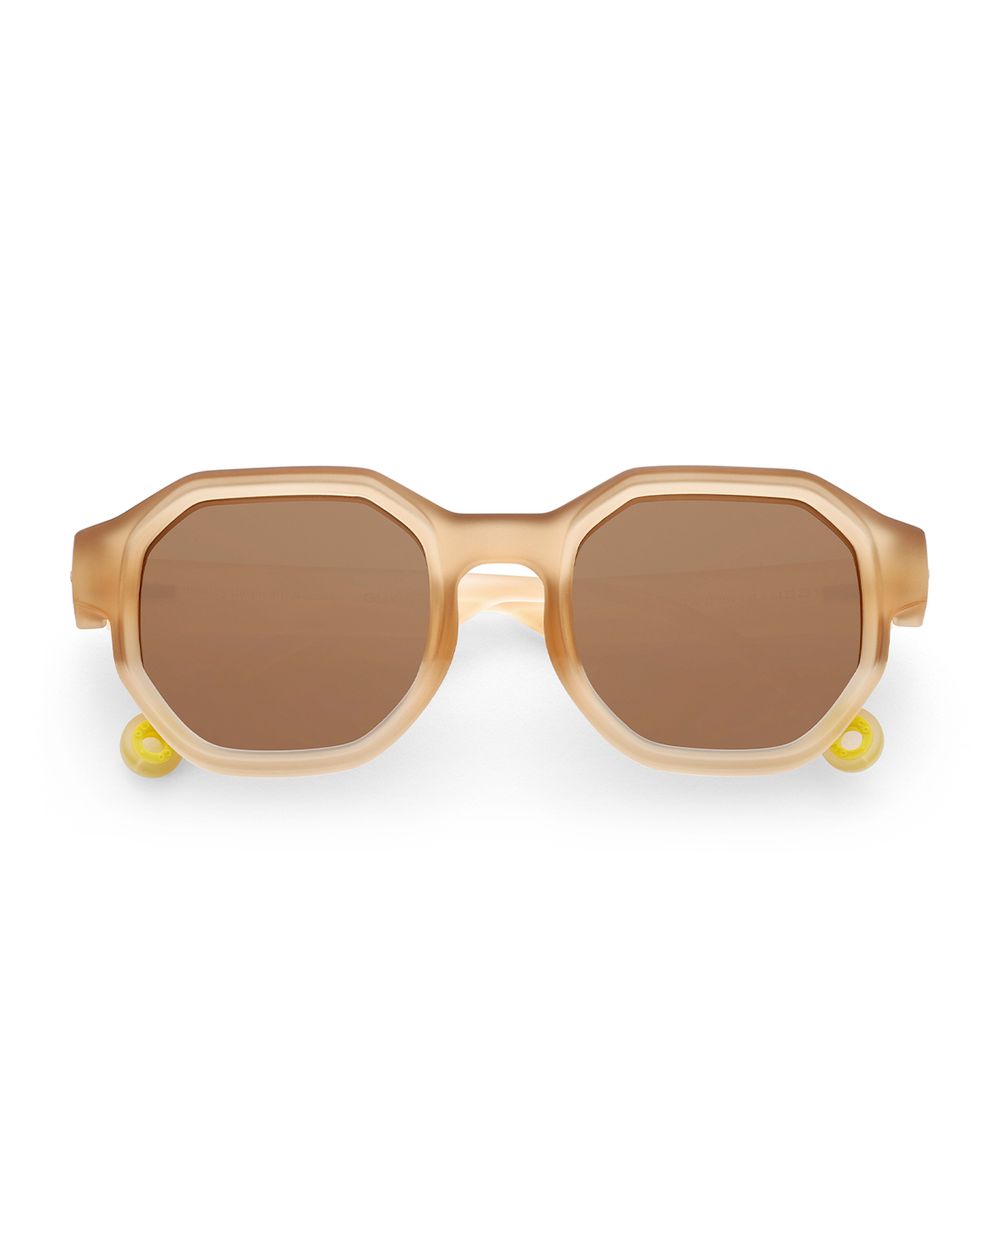 Adult Sunglasses Colorblock Sand #D